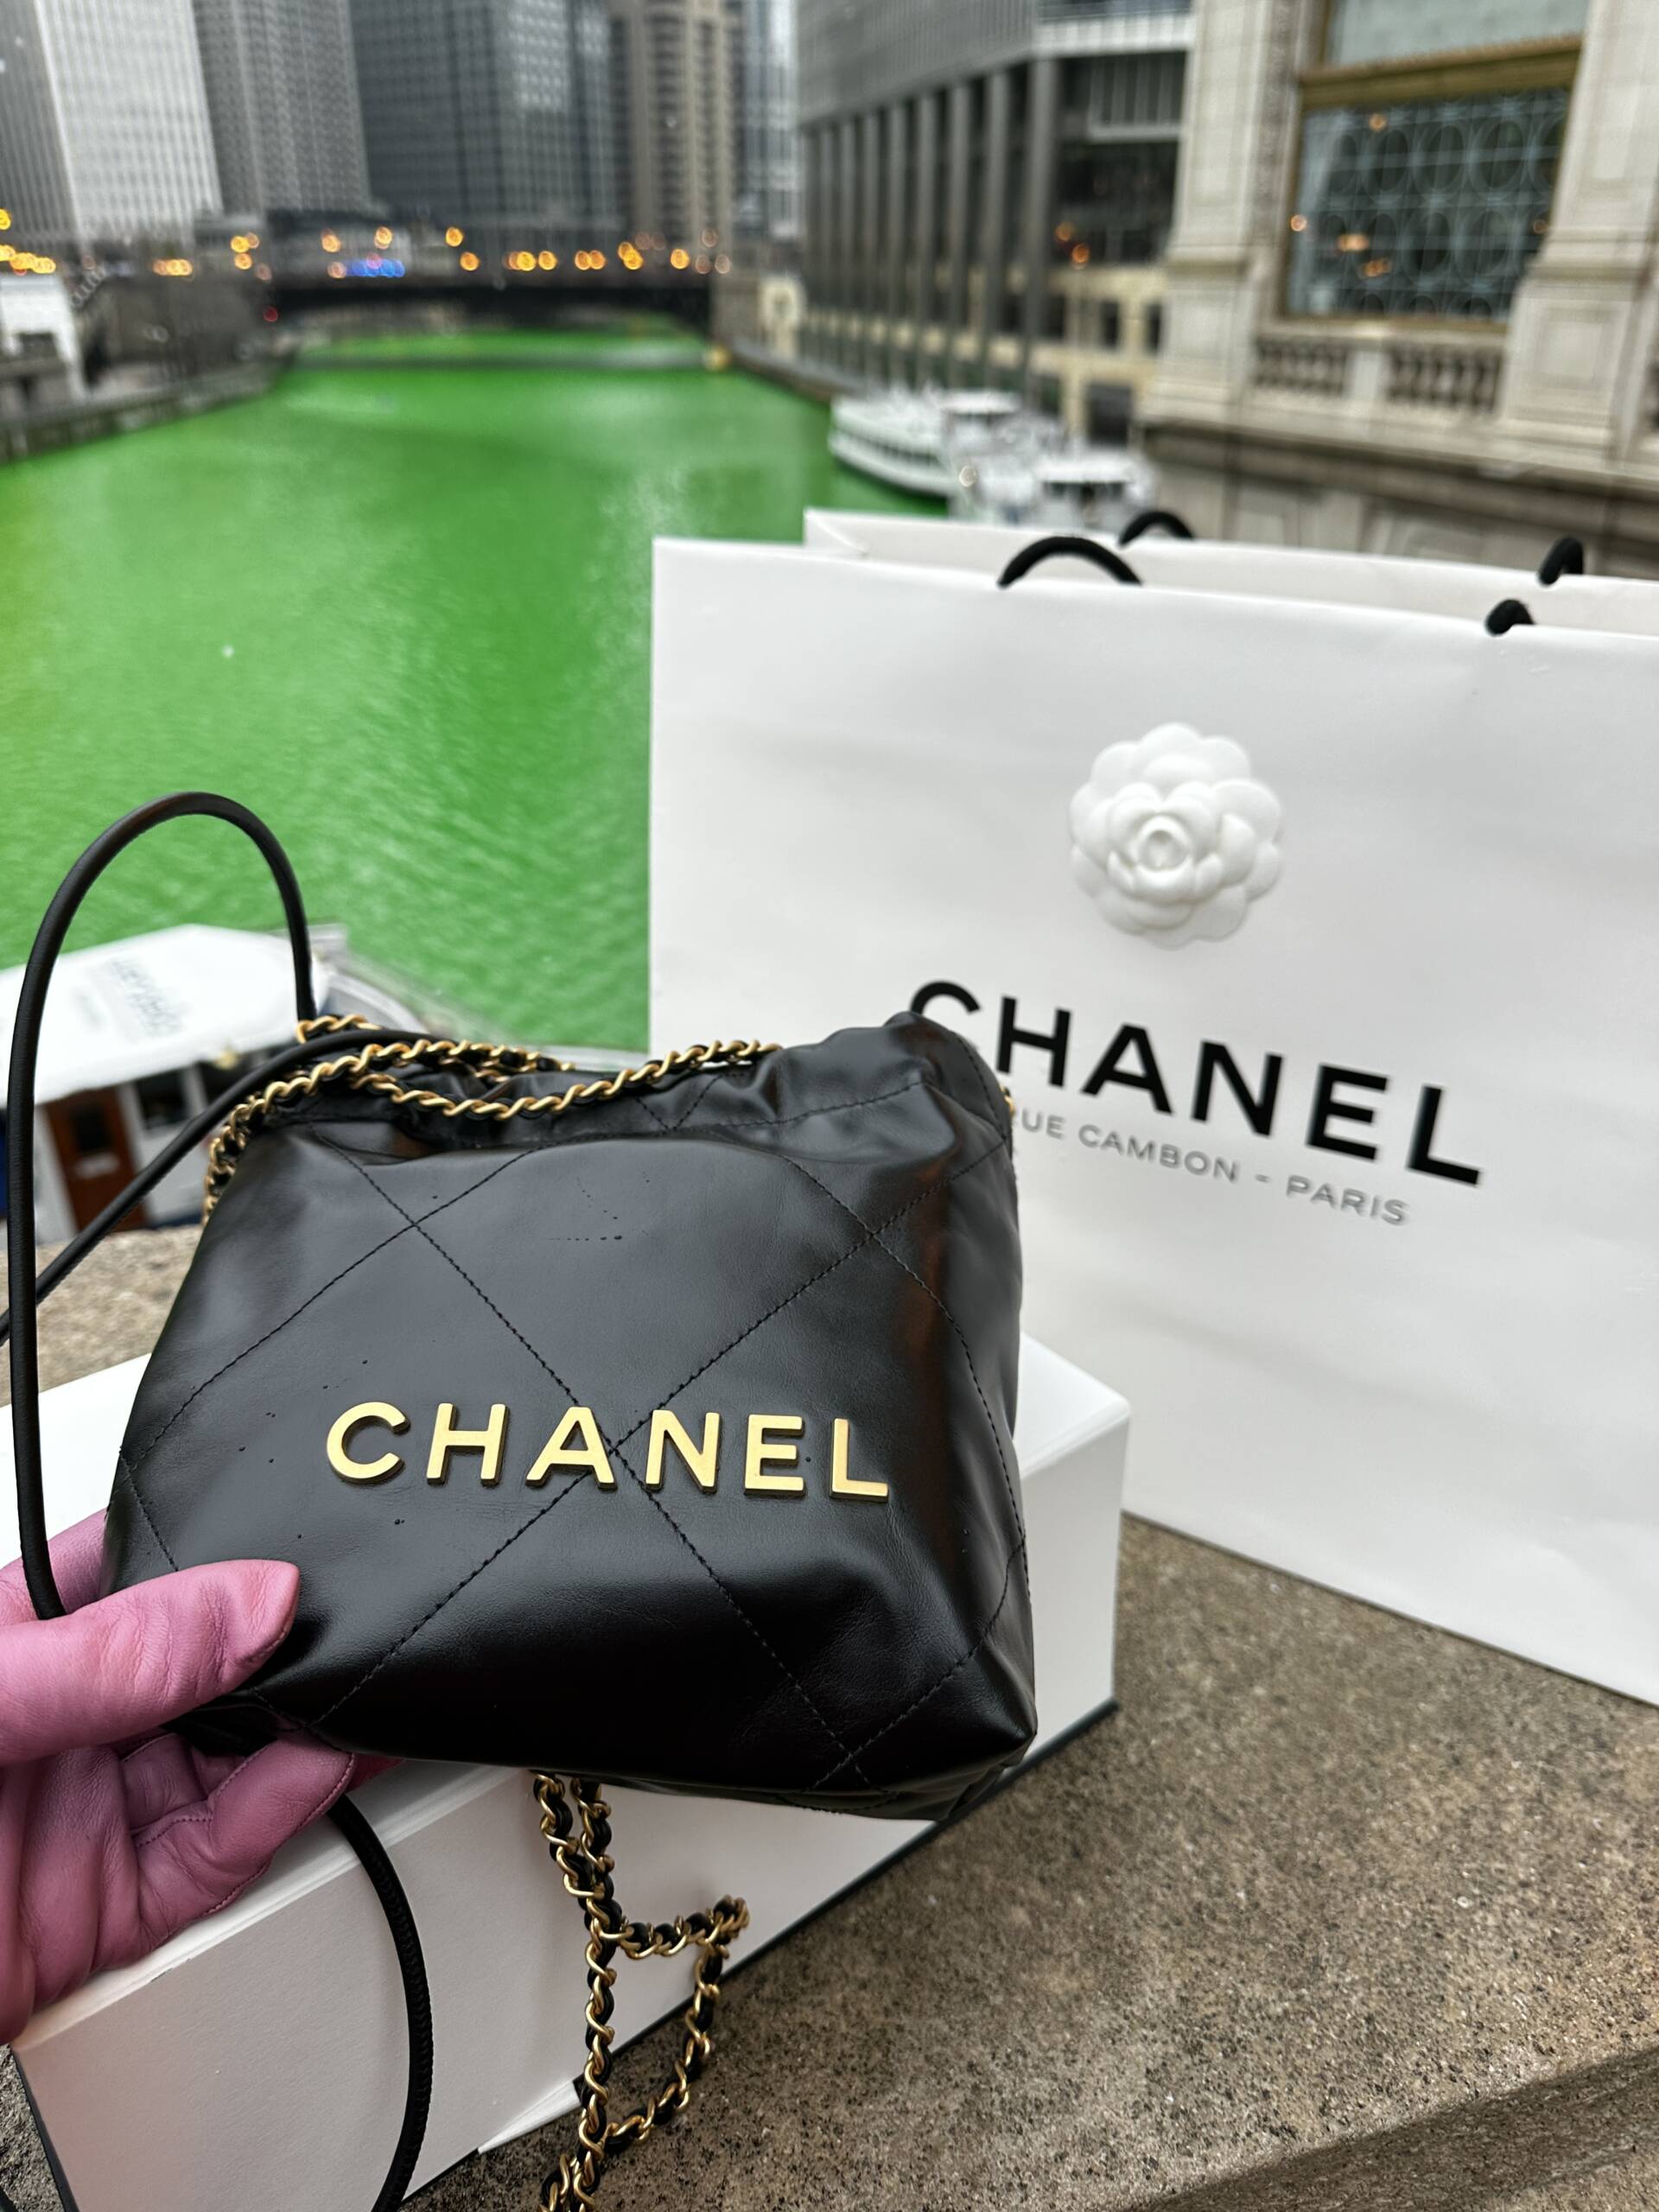 Chanel bag | Gallery posted by alfred karathri | Lemon8